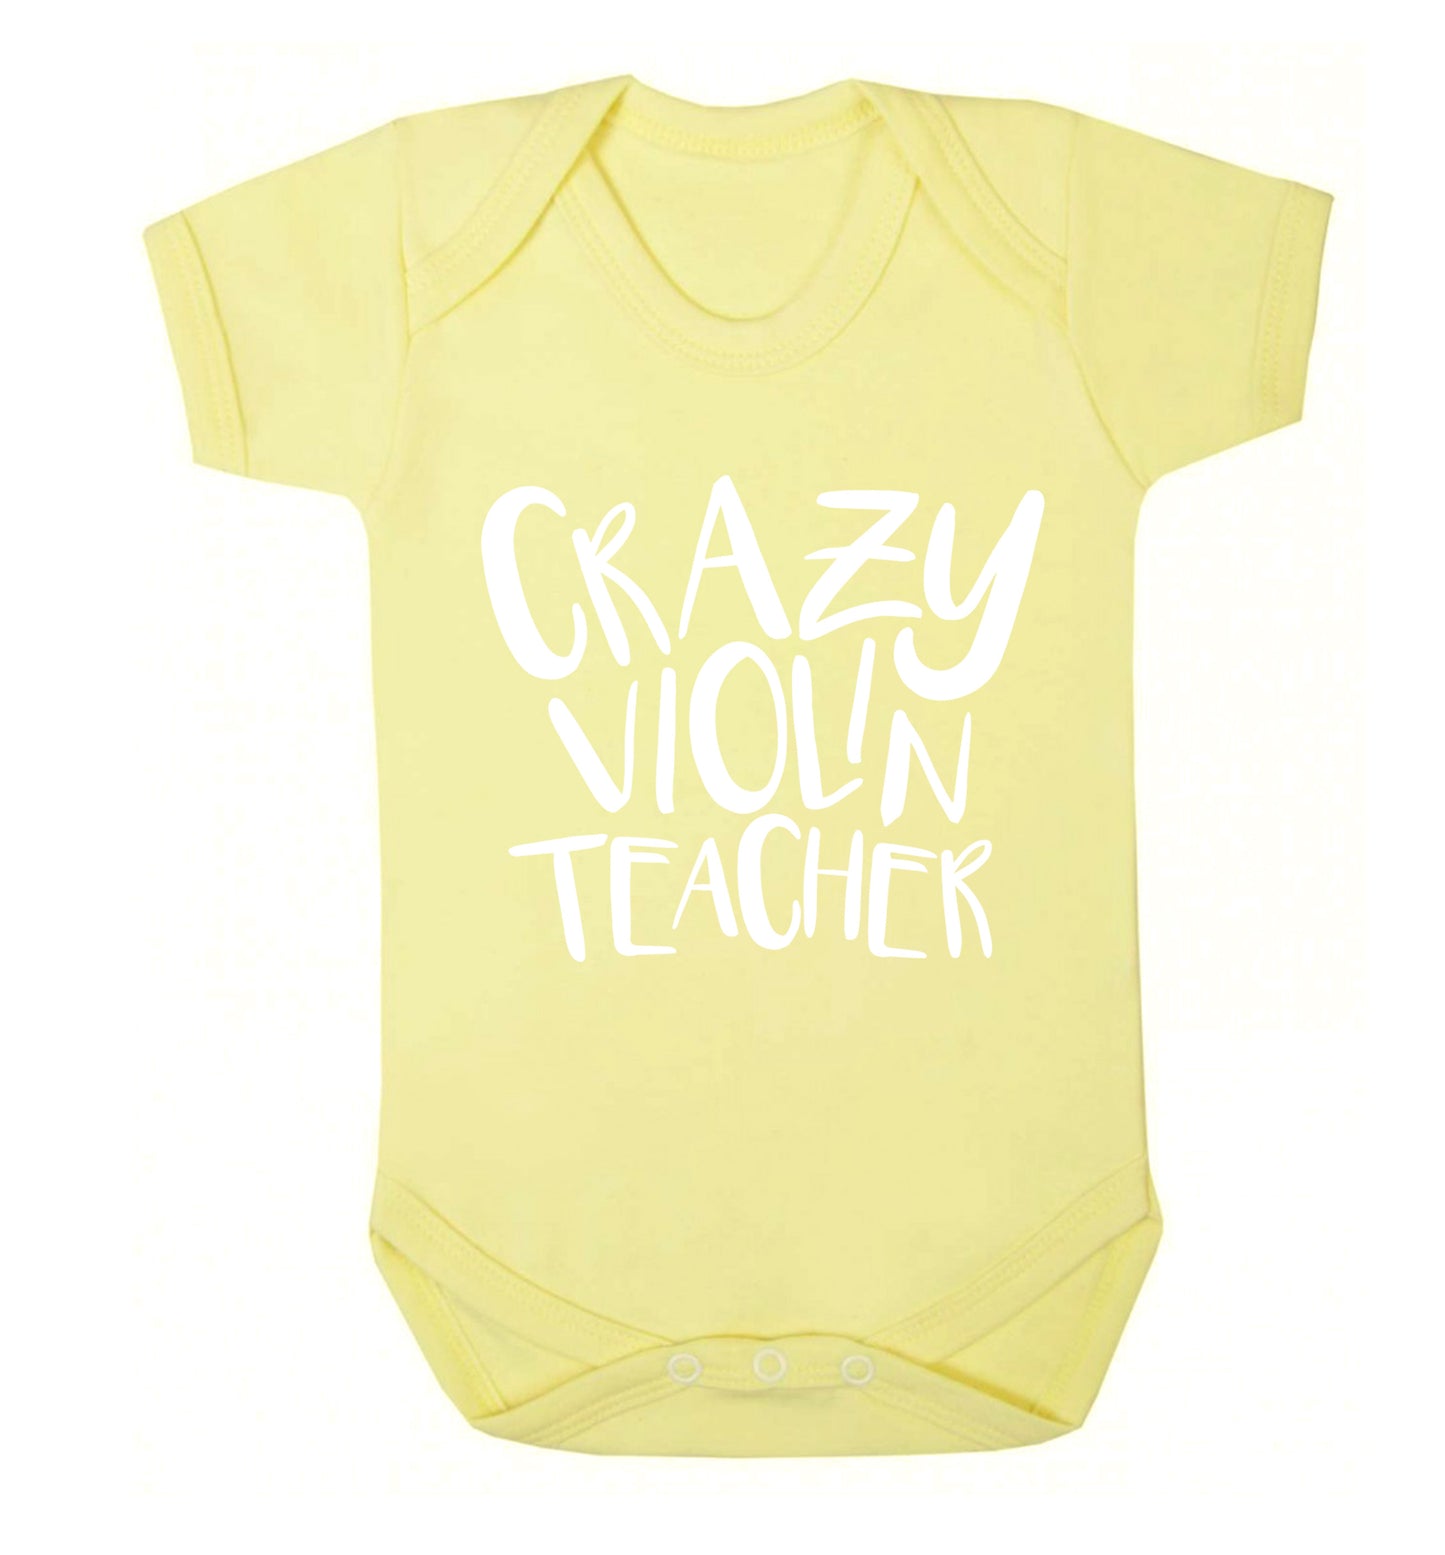 Crazy violin teacher Baby Vest pale yellow 18-24 months